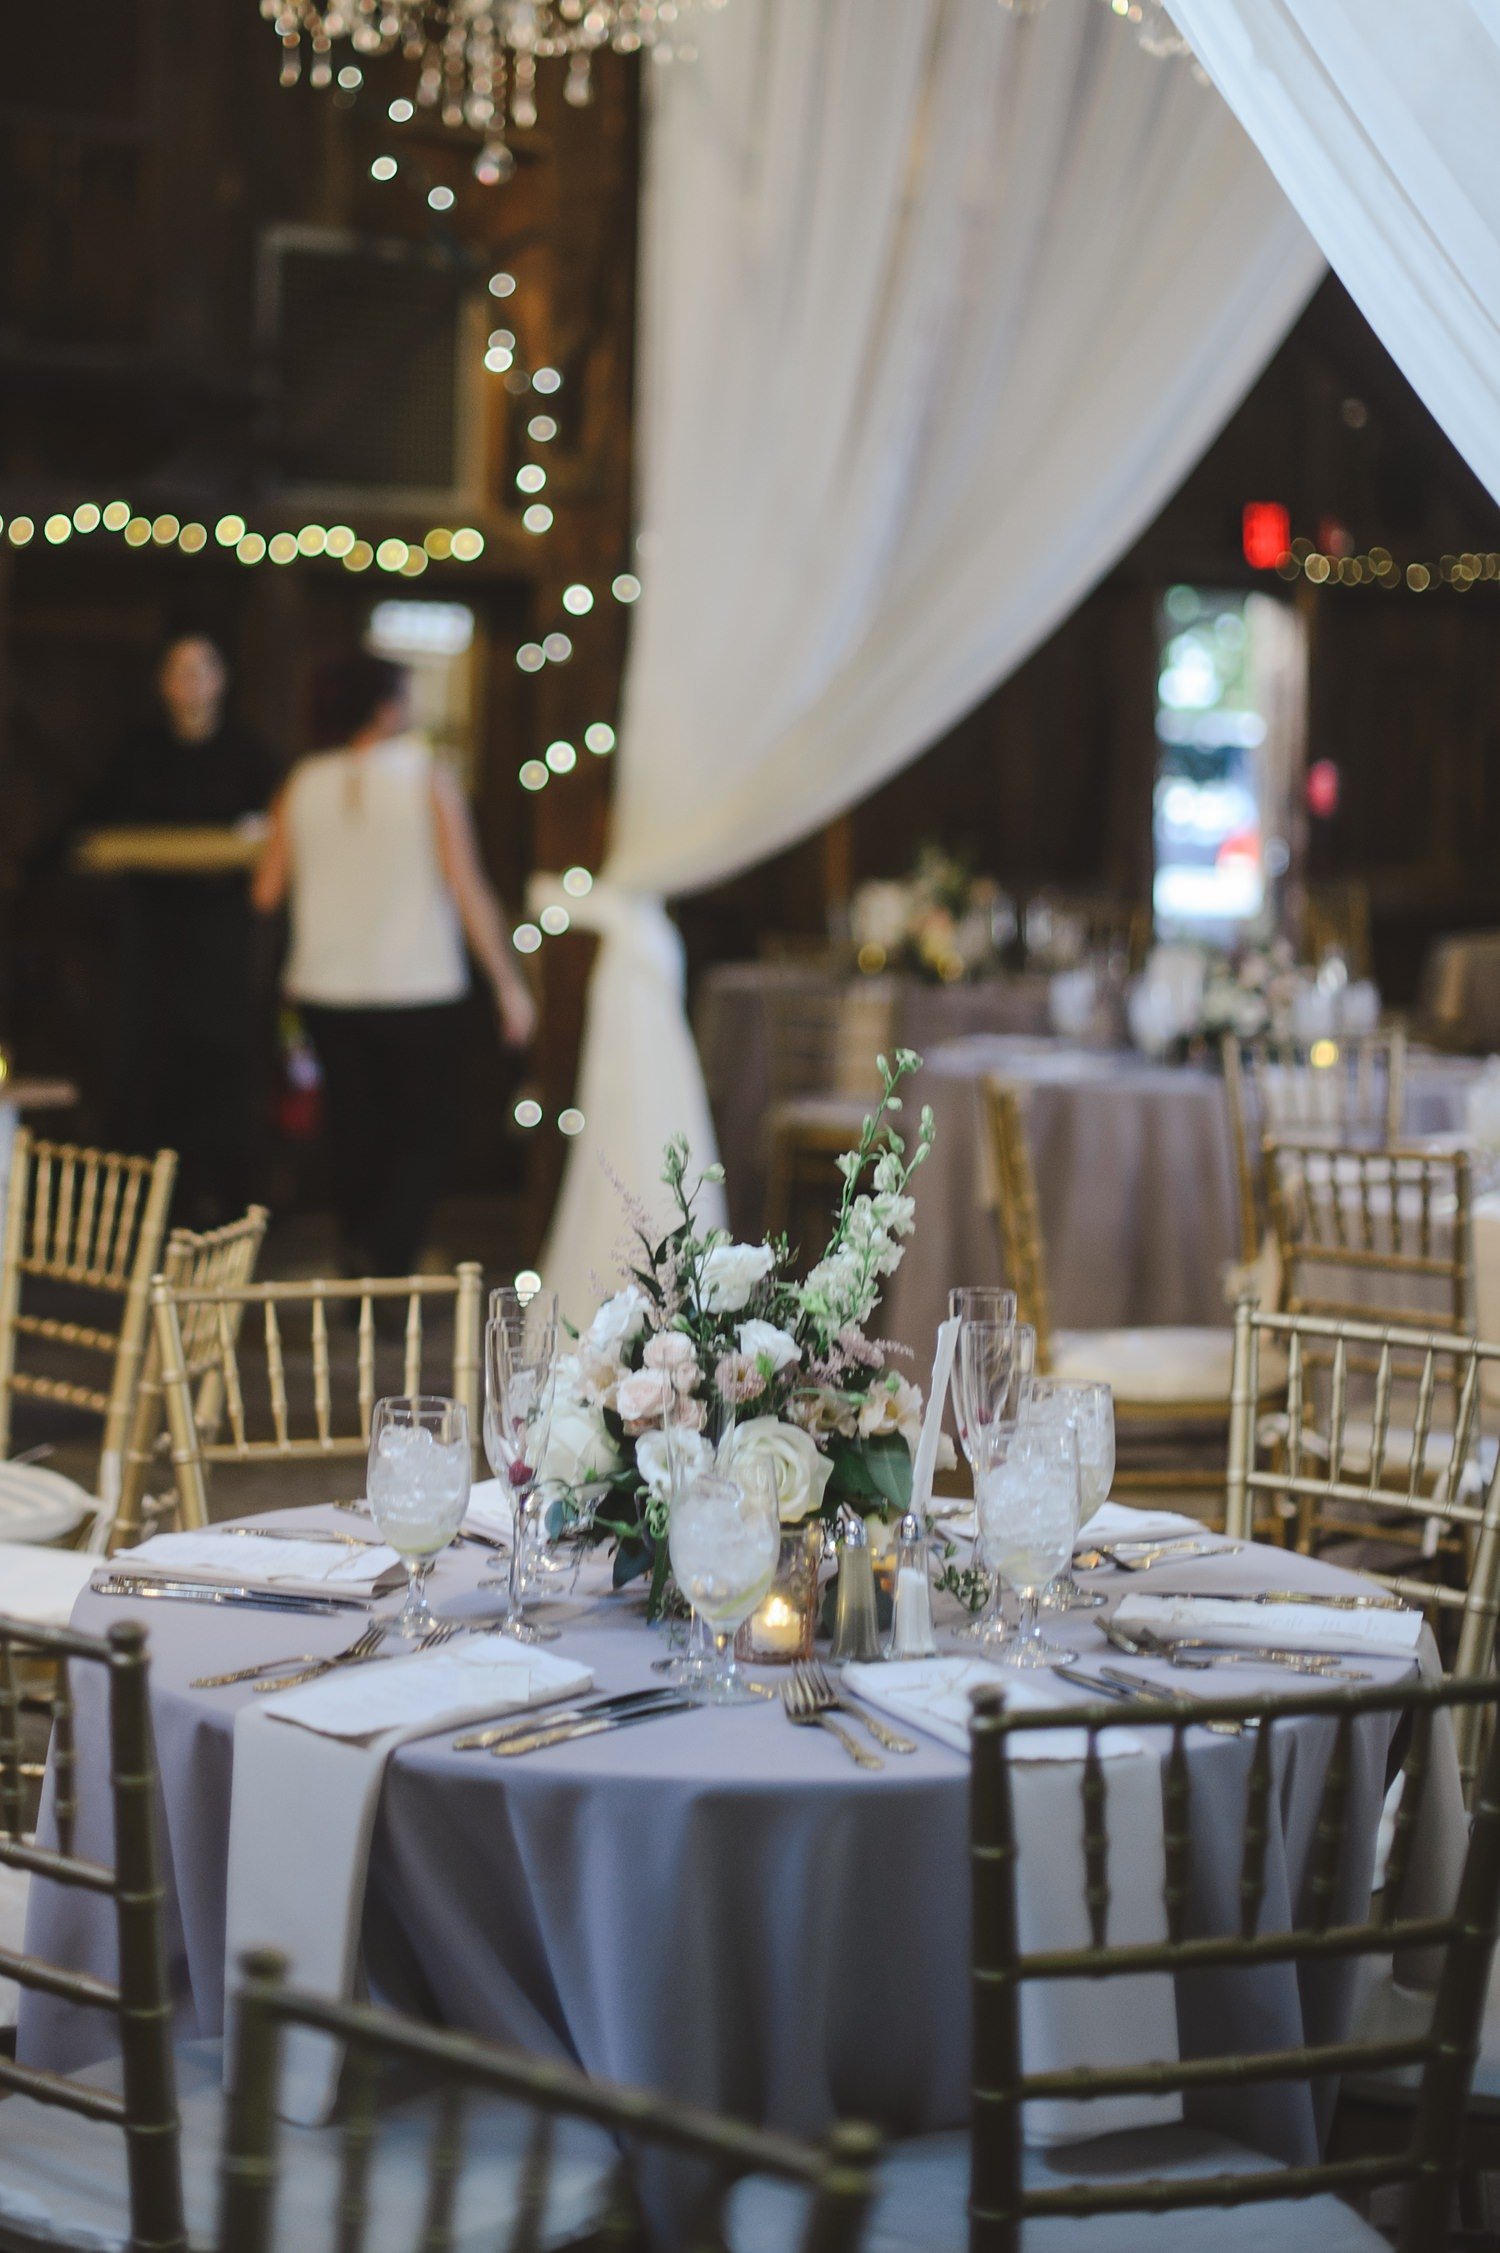 Rustic & Glamorous chandelier wedding at The Webb Barn in Wethersfield, CT